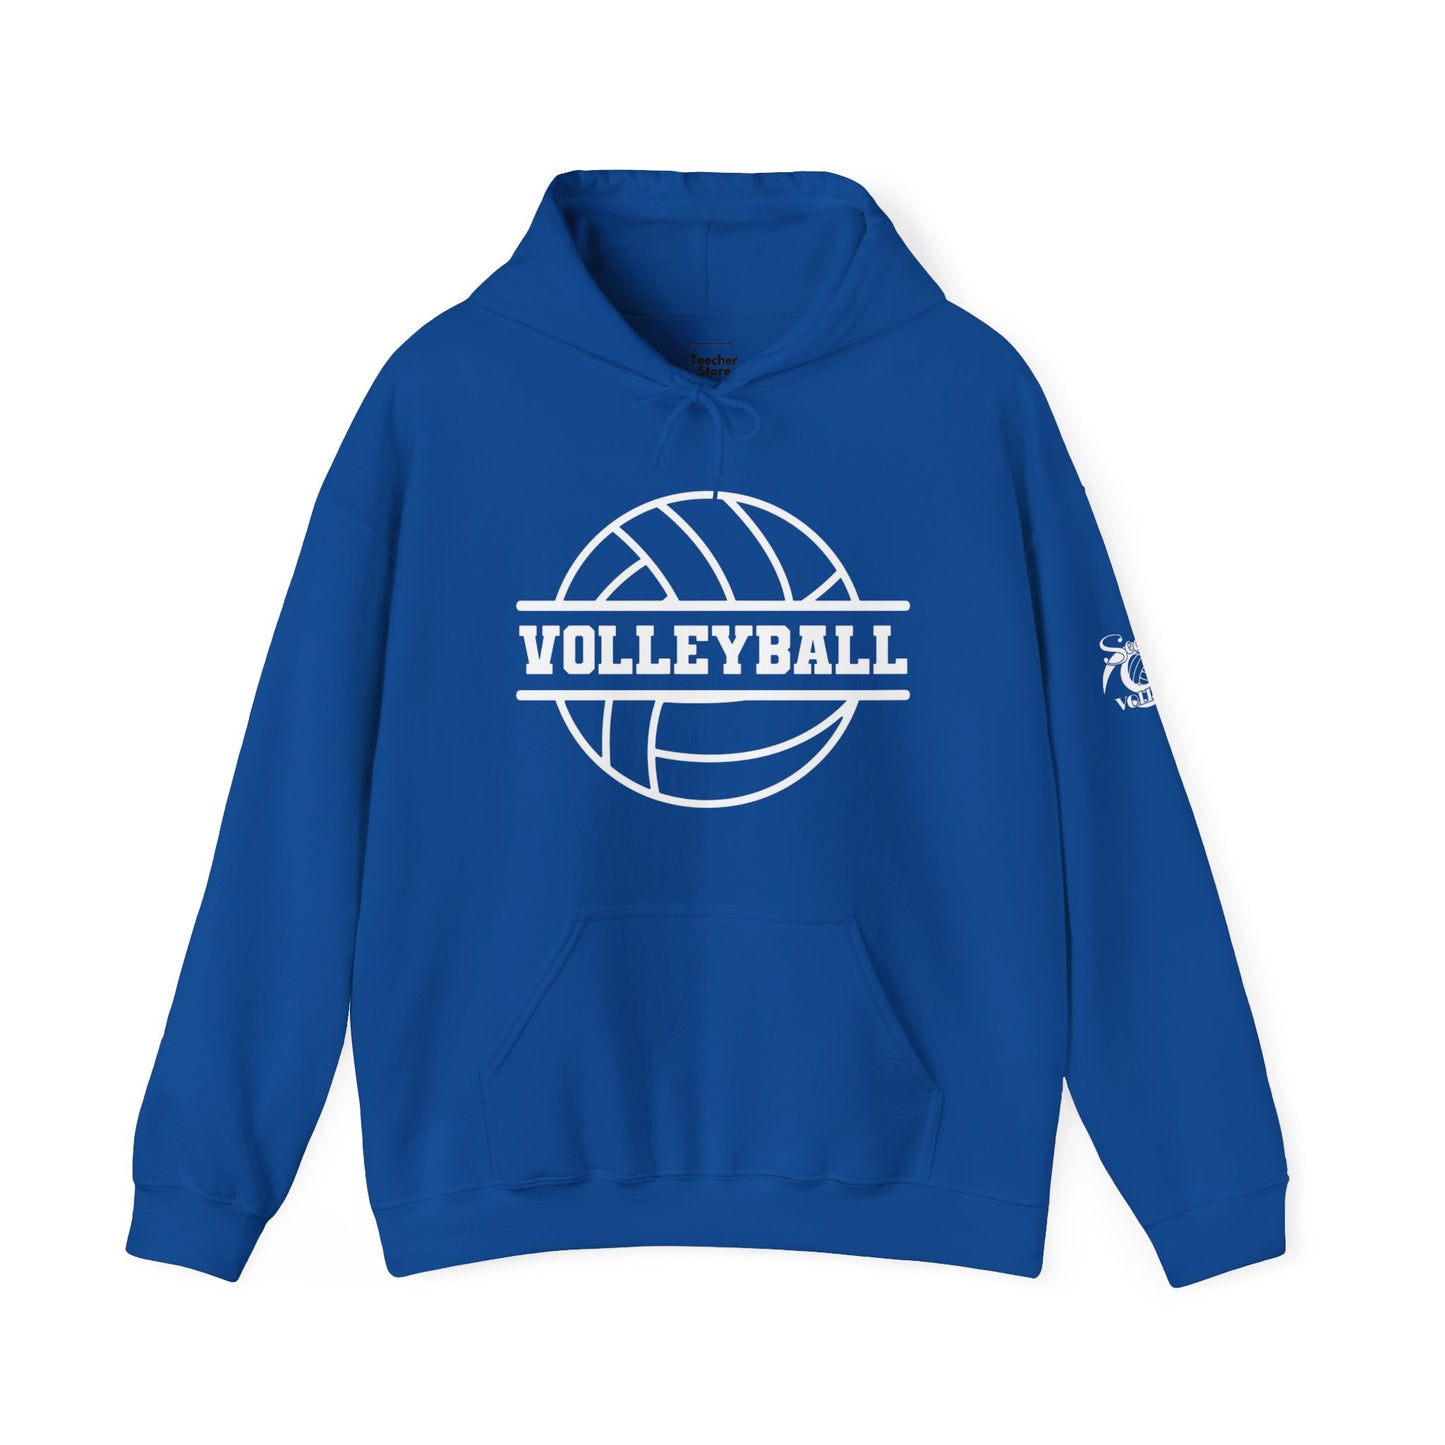 SS Volleyball Hooded Sweatshirt